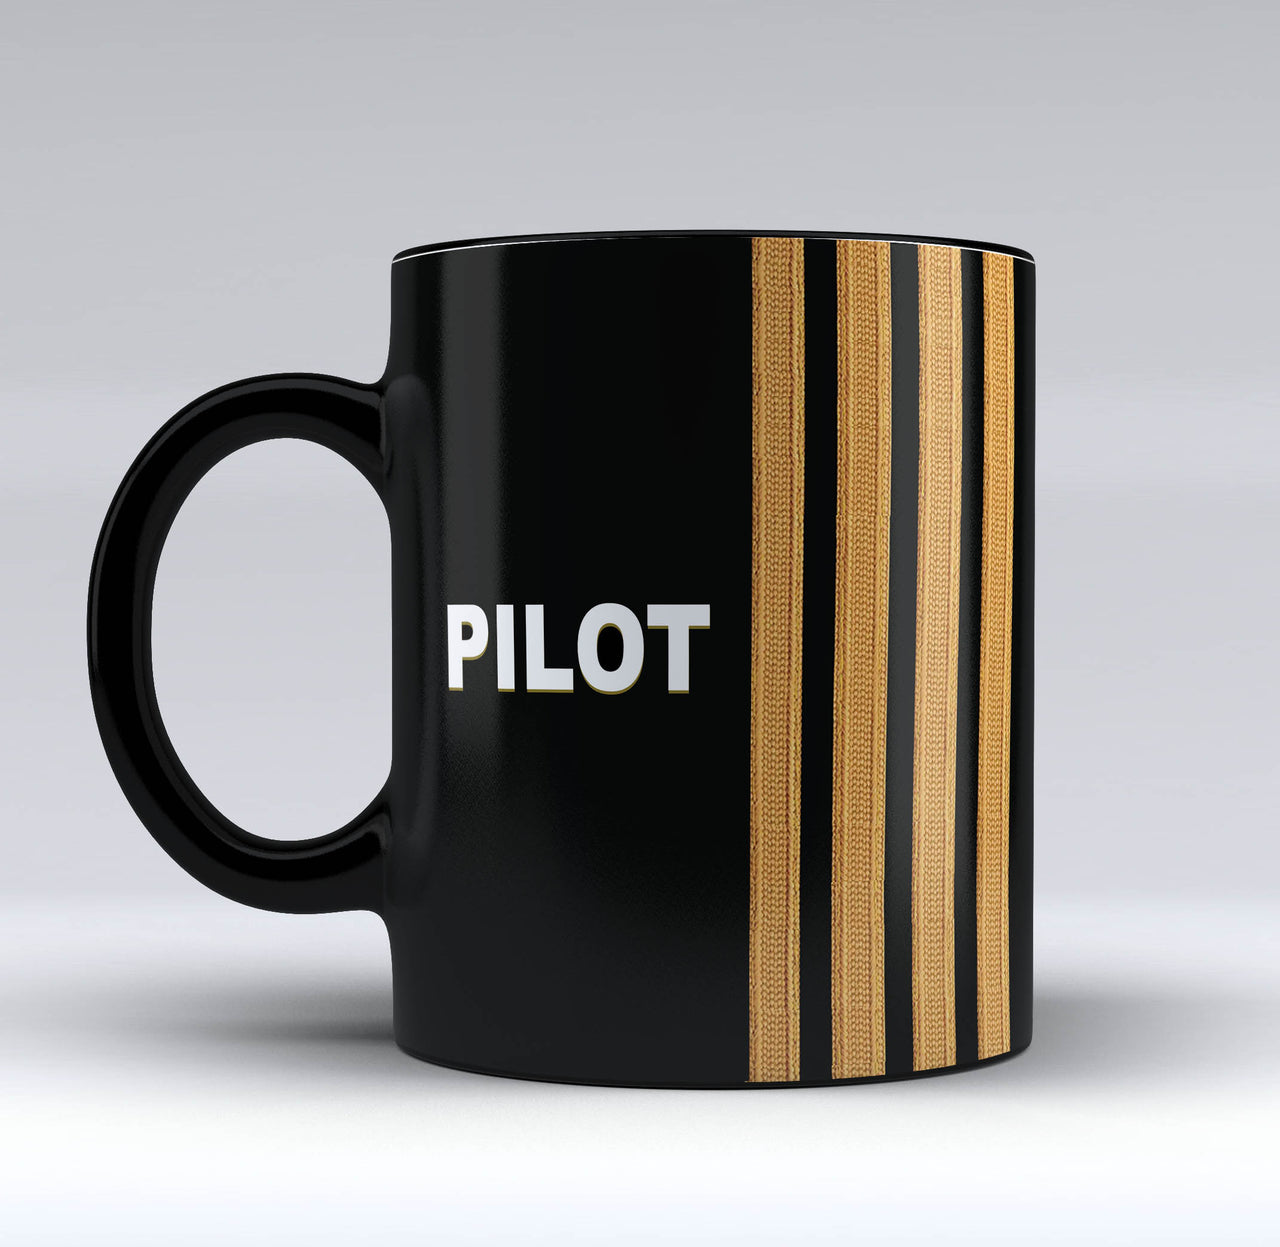 PILOT & Pilot Epaulettes (4,3,2 Lines) Designed Black Mugs